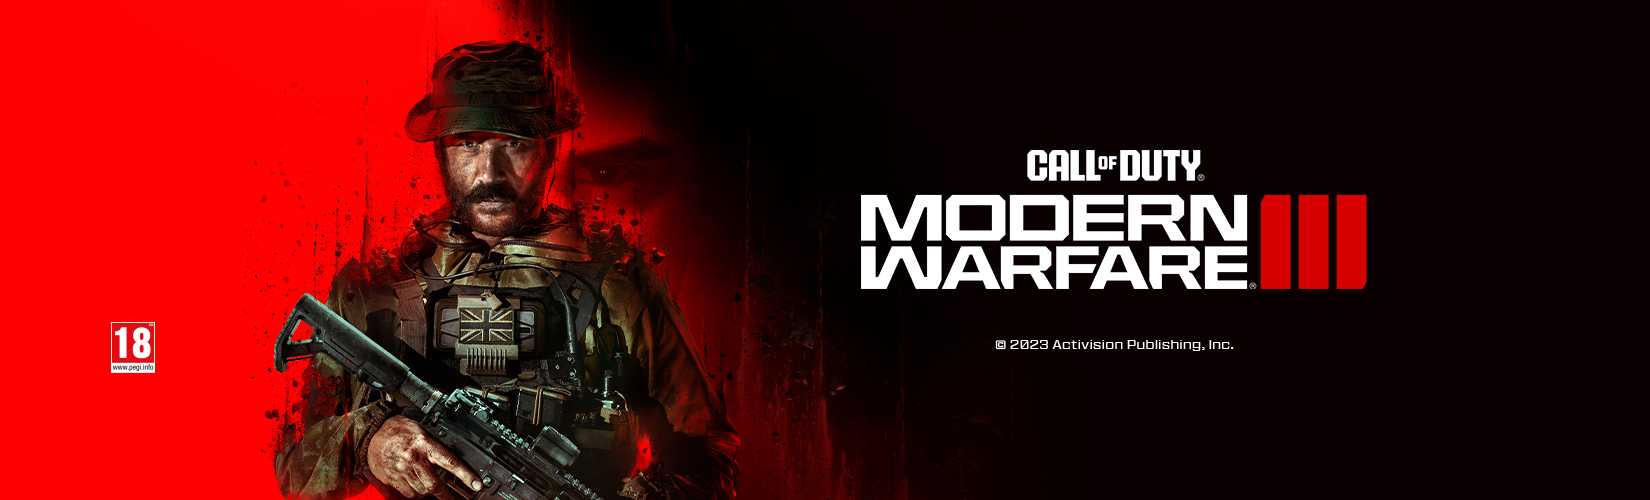 Pre-order Call of Duty: Modern Warfare III.